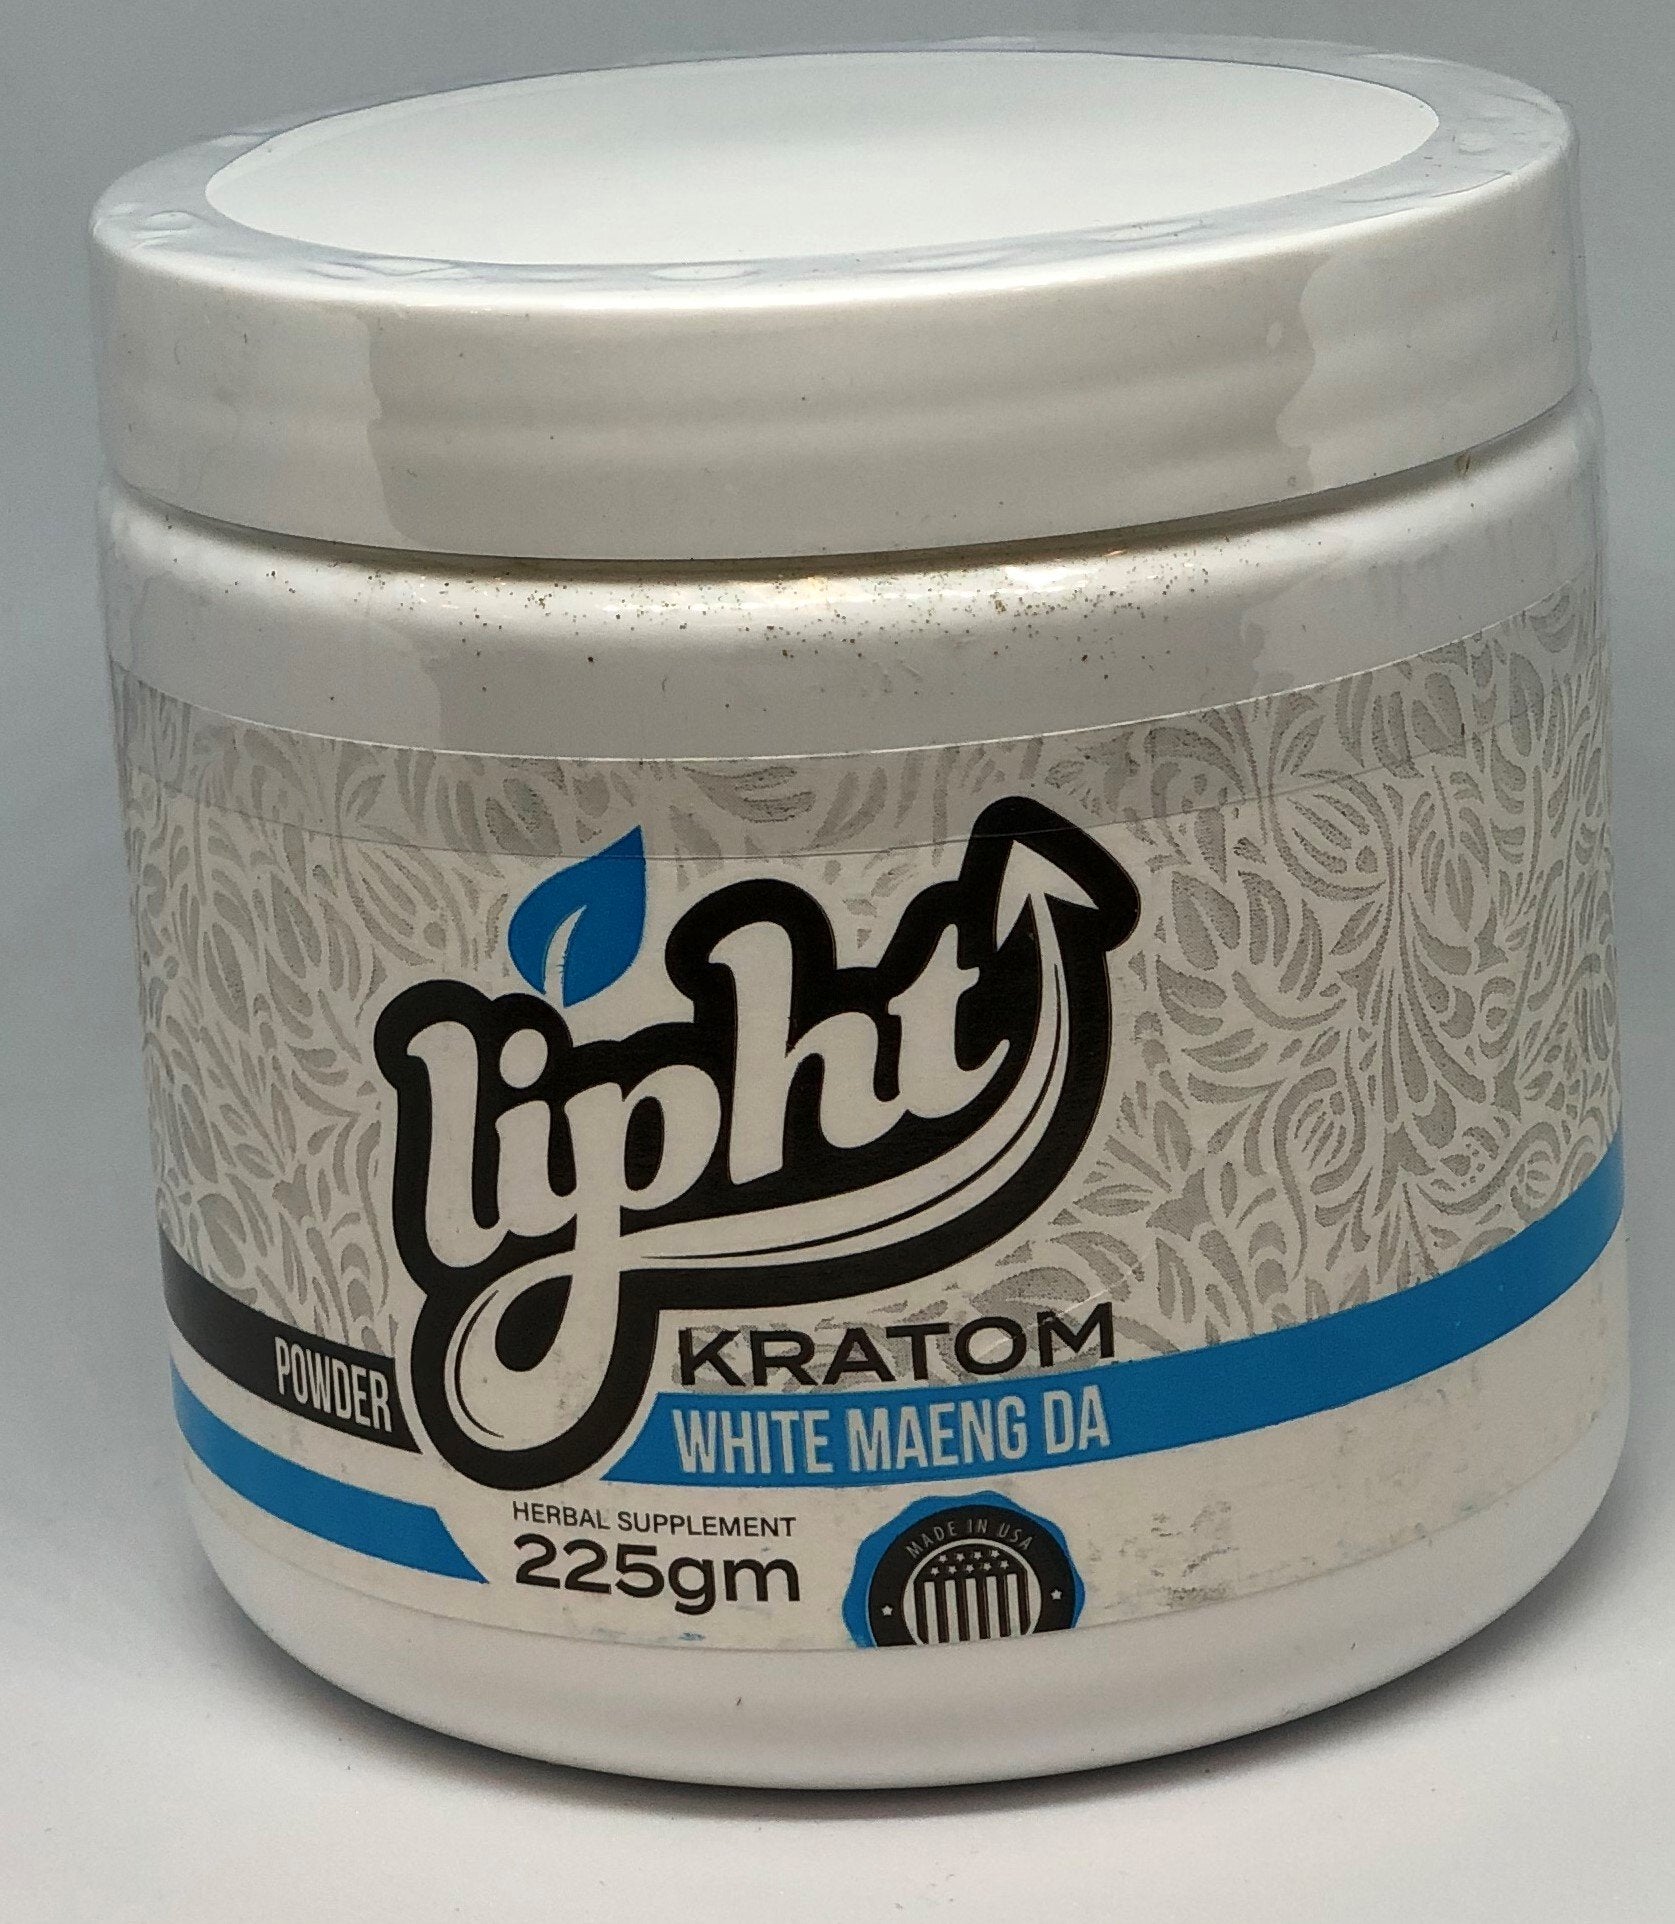 Lipht Kratom  Premium 225G Powder